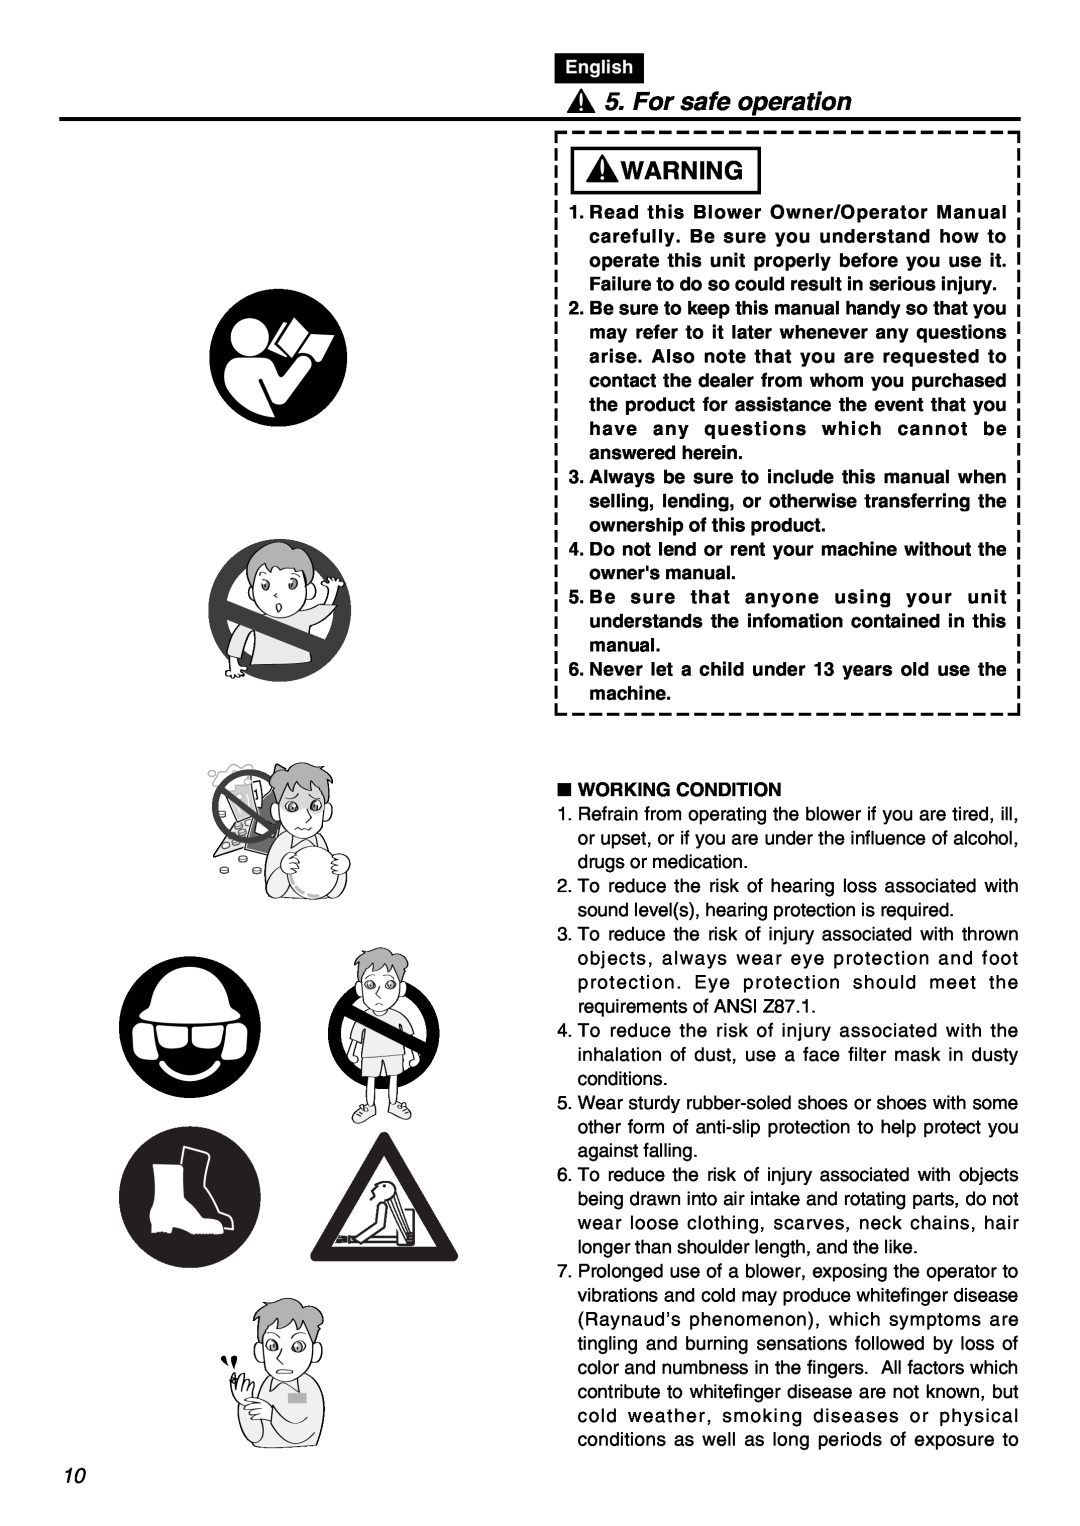 RedMax EBZ7001RH-CA, EBZ7001-CA manual For safe operation, English 